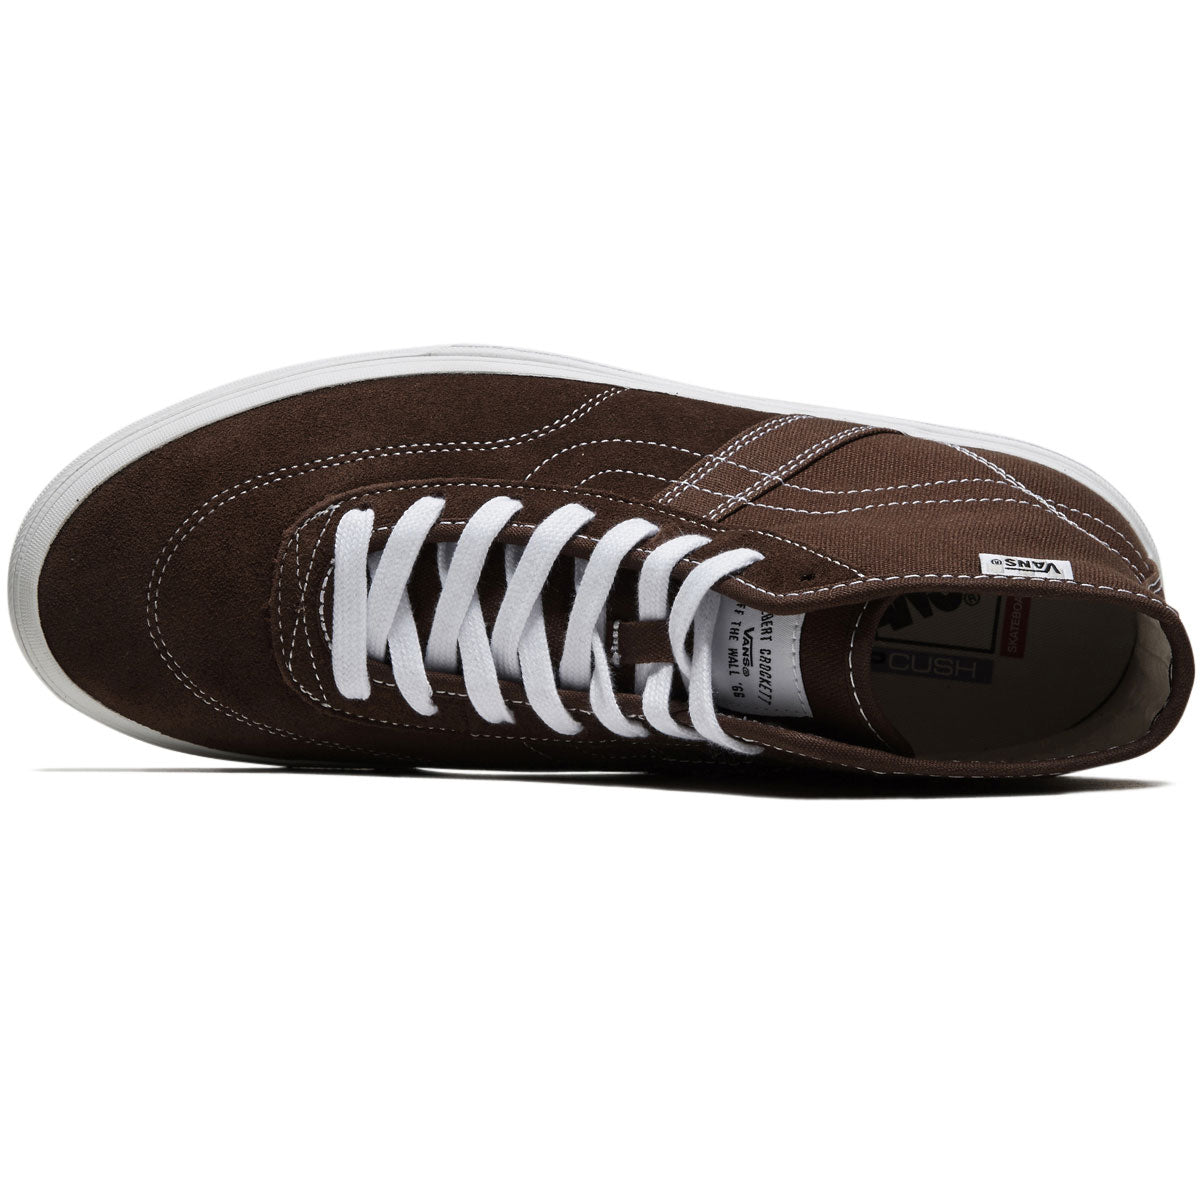 Vans Crockett High Decon Shoes - Brown/White image 3